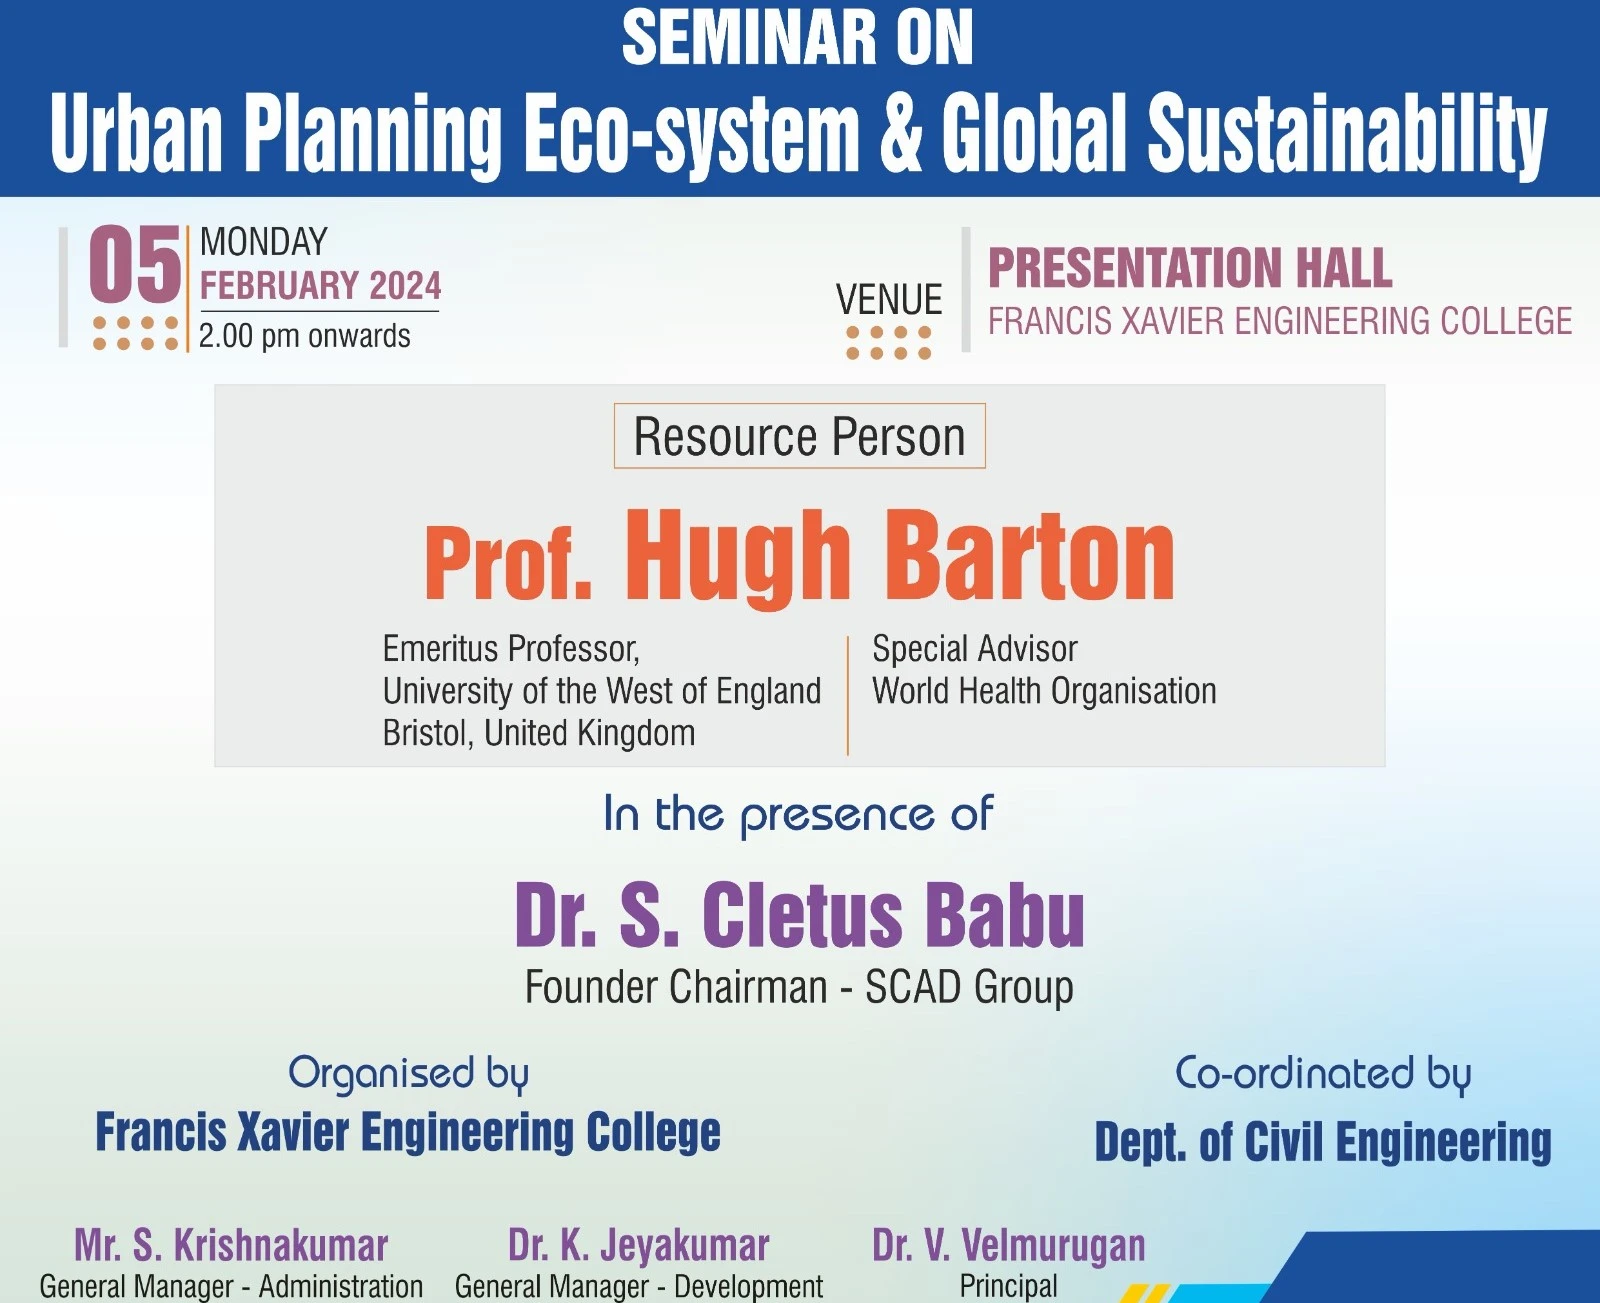 Seminar on Urban Planning Eco-System & Global Sustainability